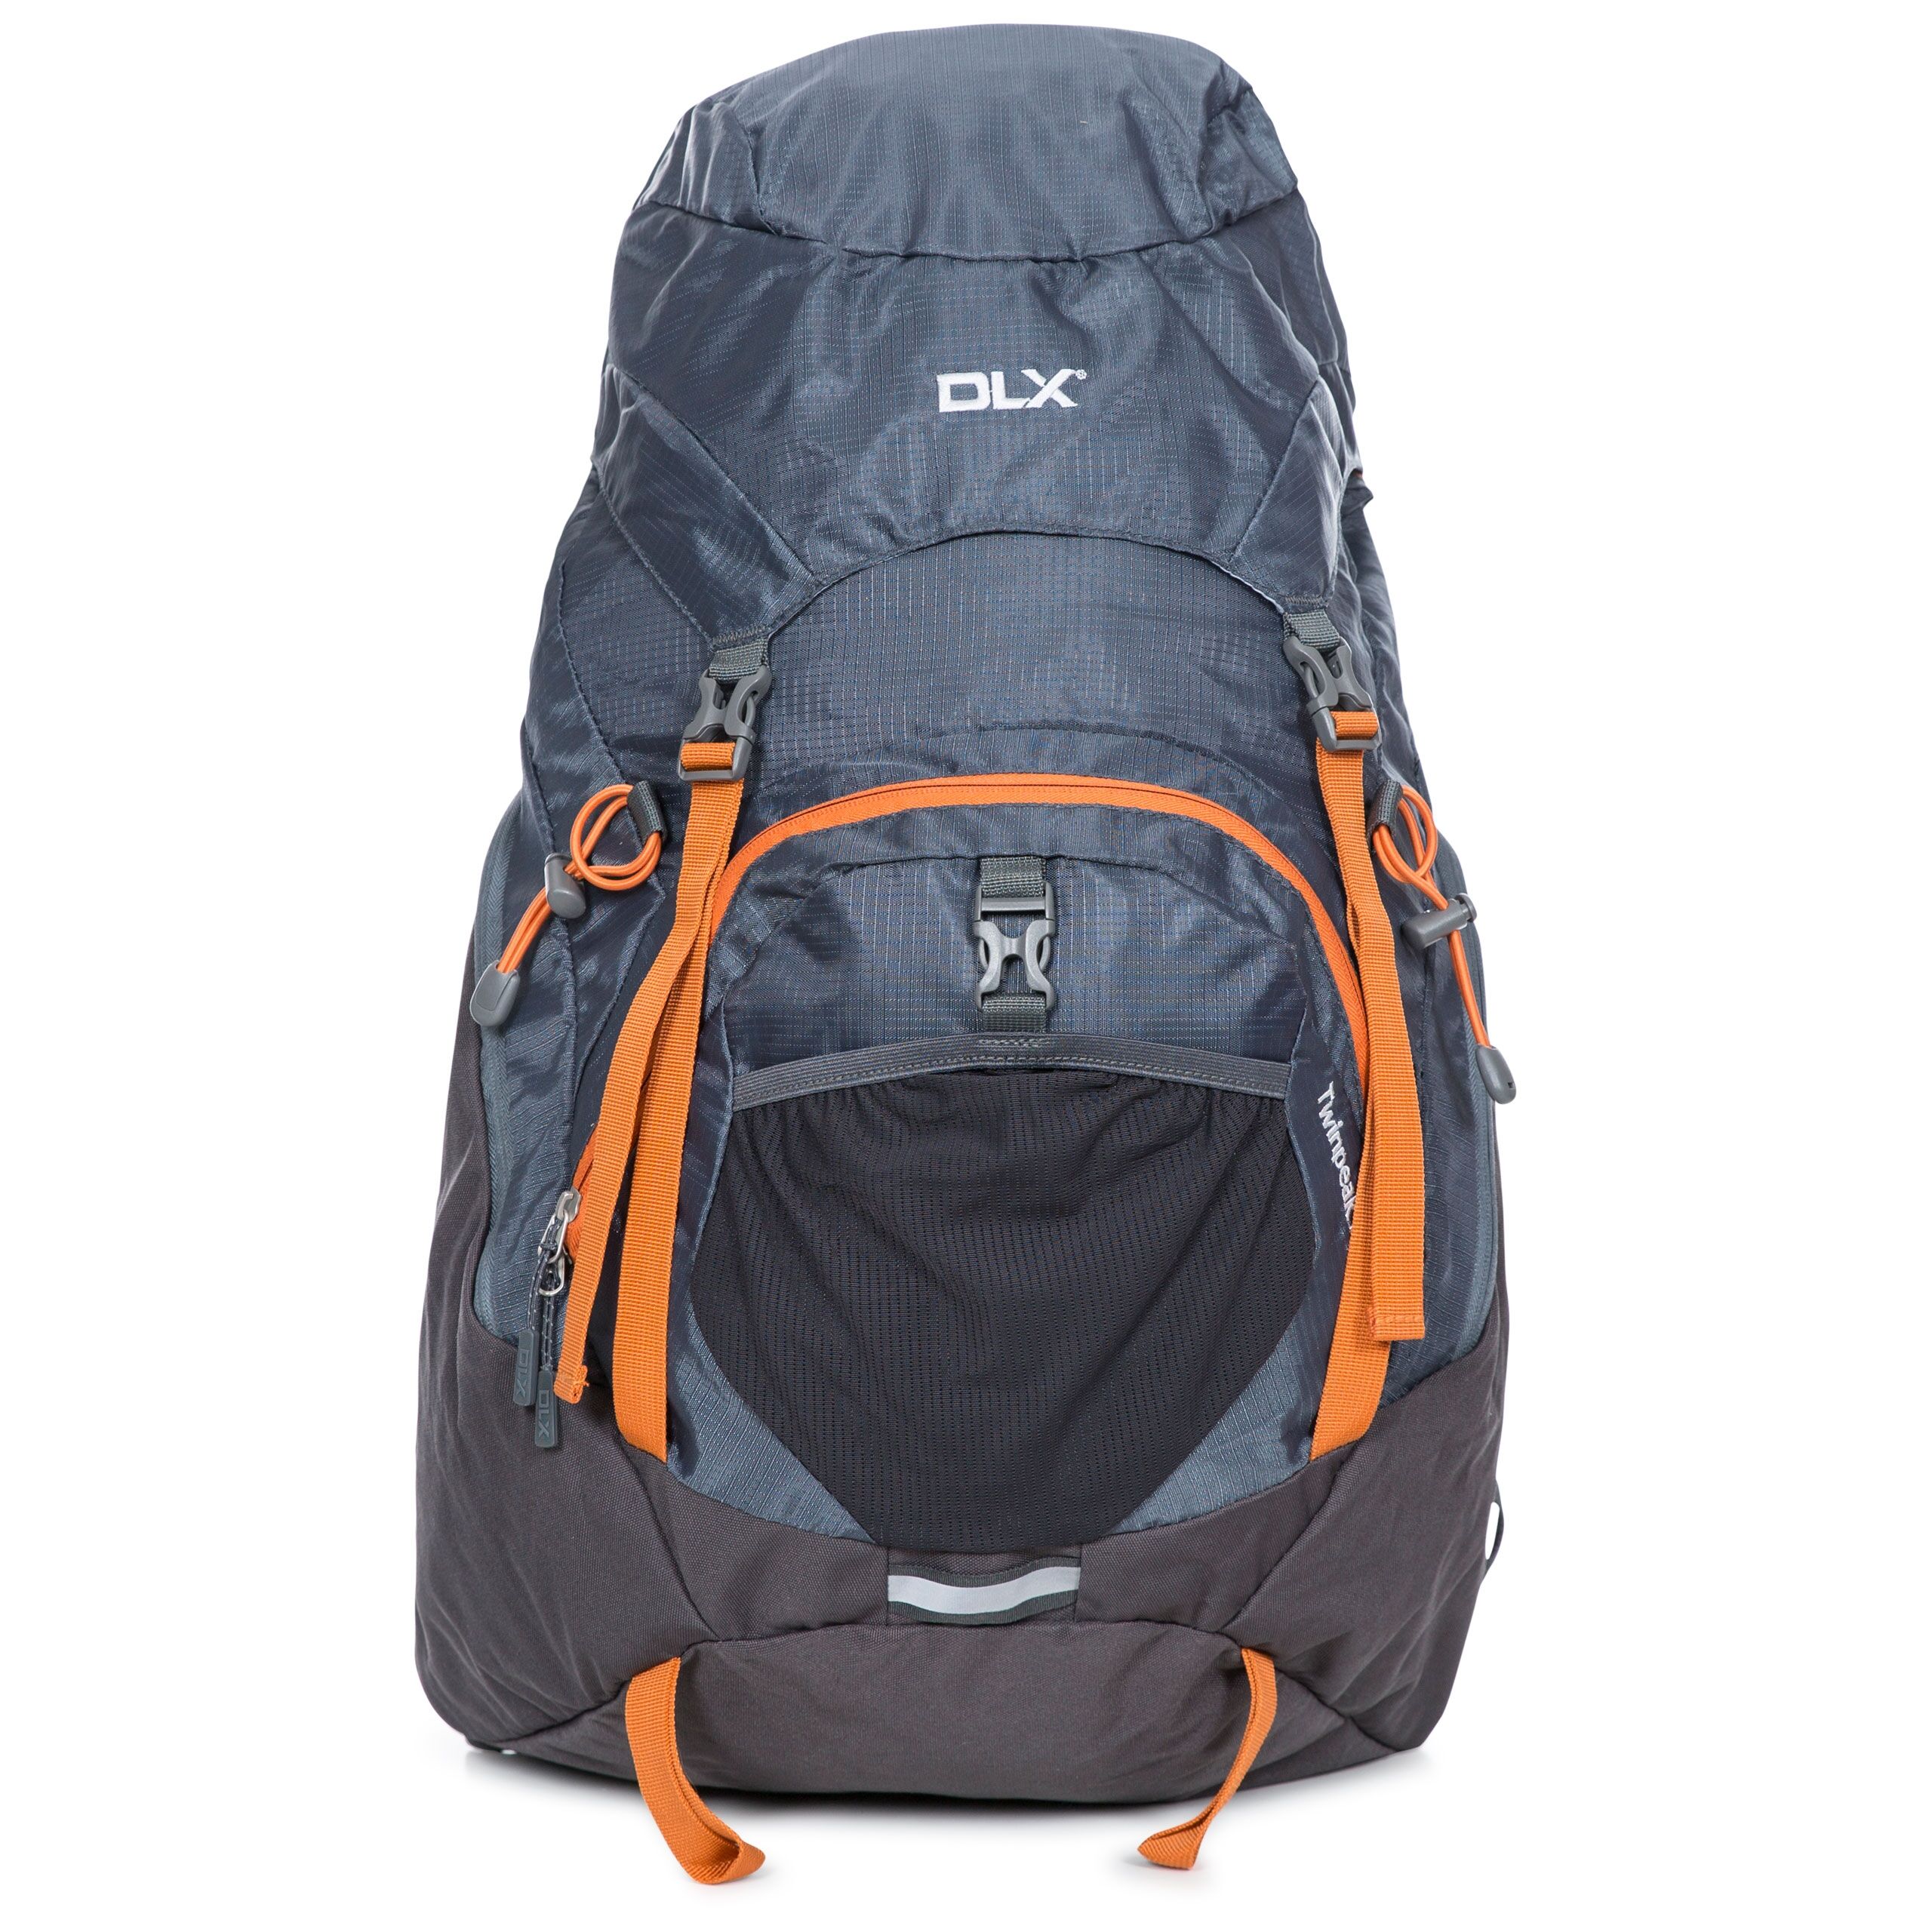 DLX 45L Rucksack Hiking Backpack with Hi Visibility Raincover Twinpeak